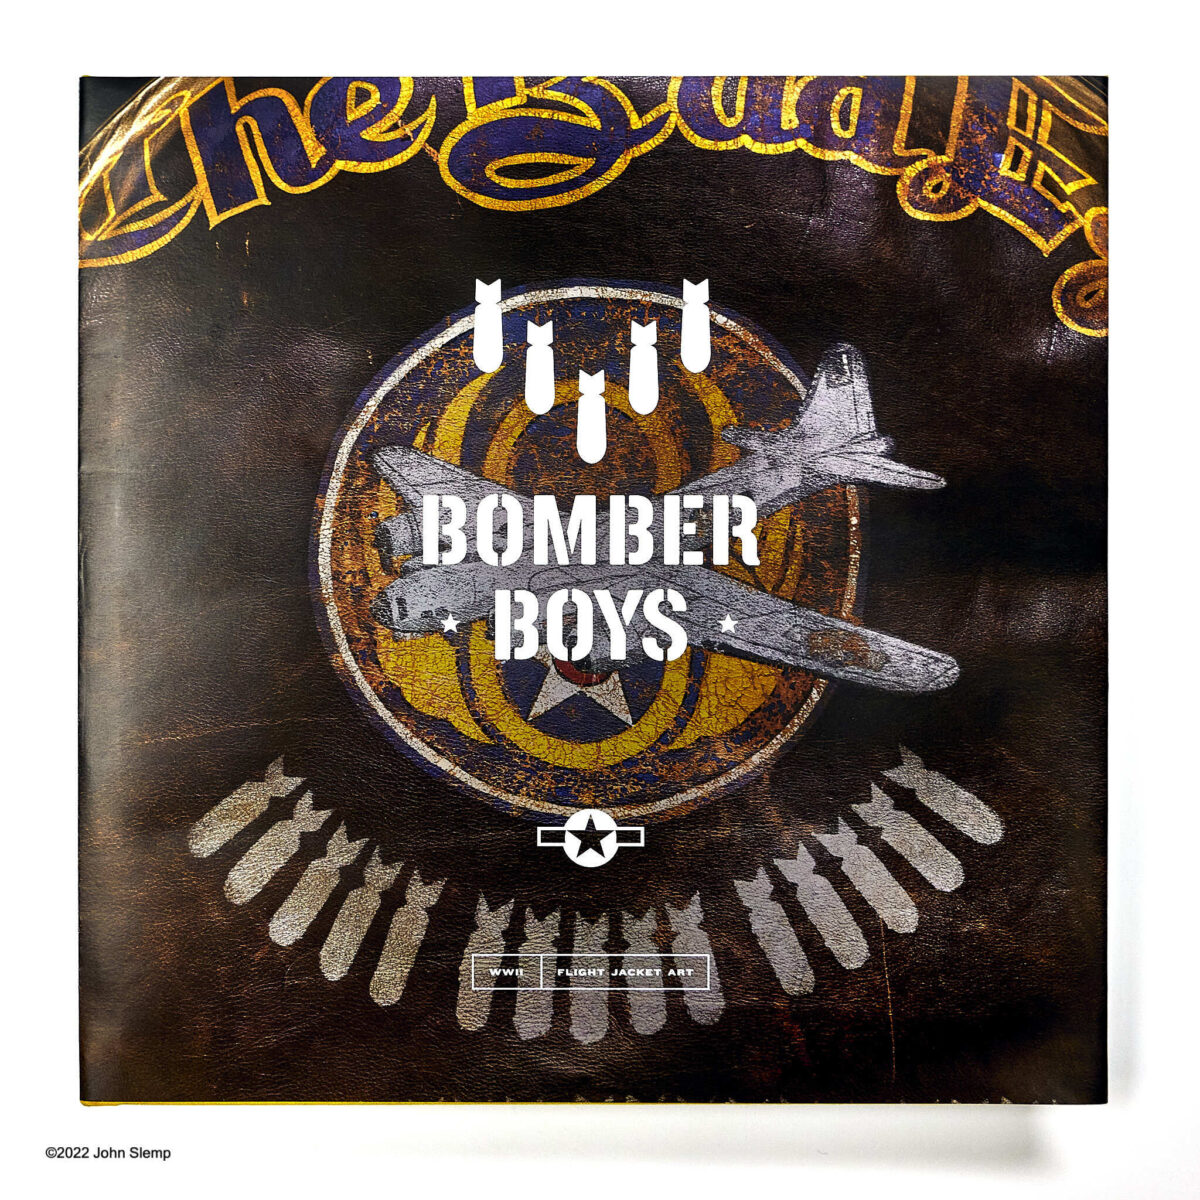 Bomber Boys WWII Flight Jacket Art Book